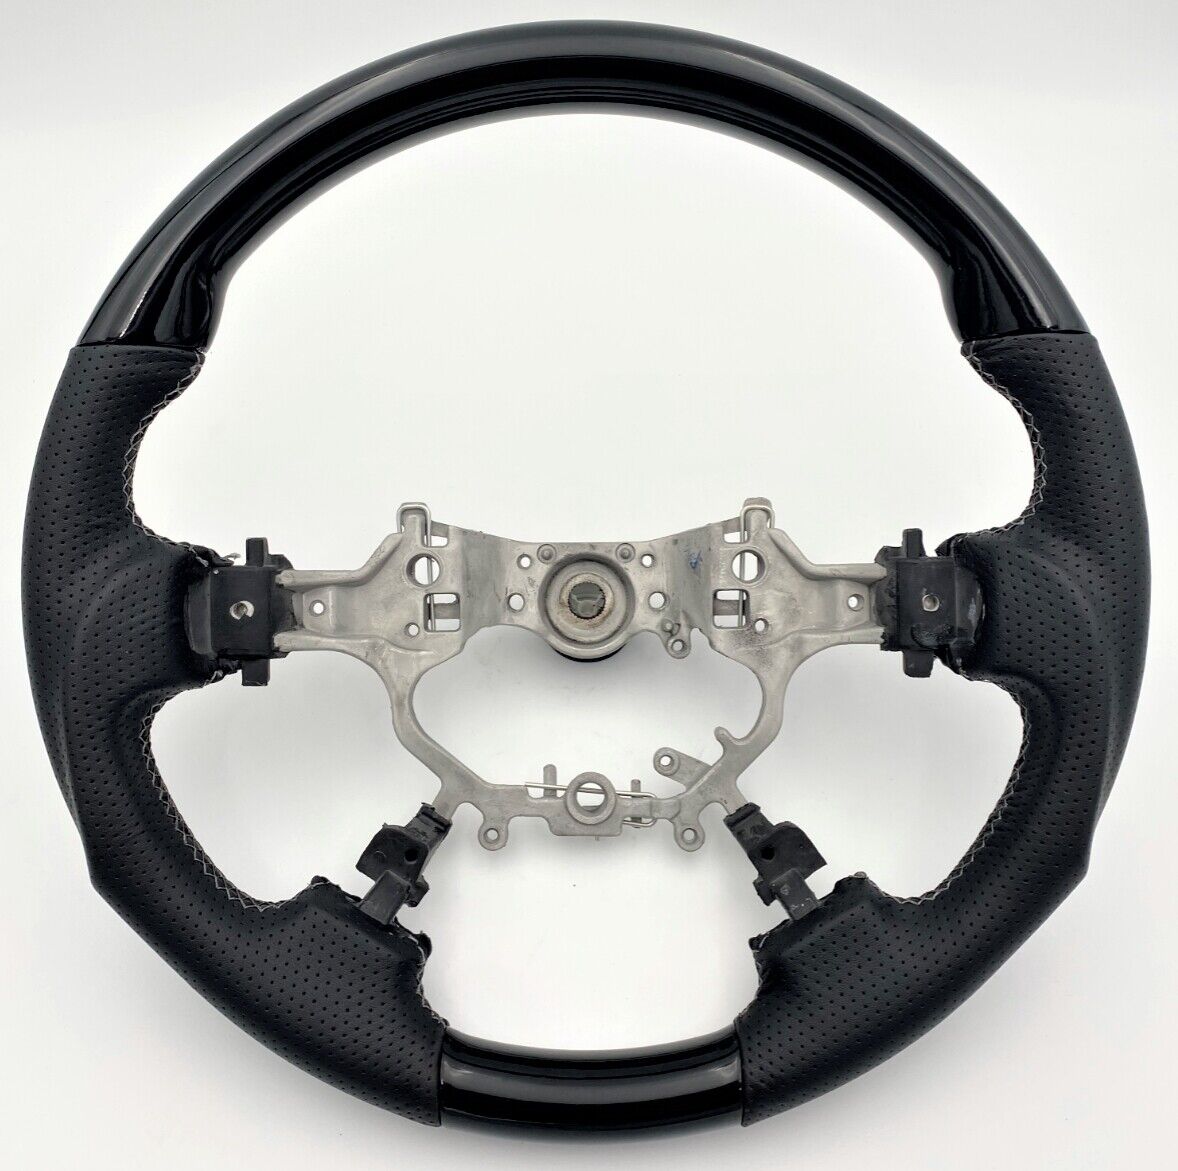 For 2012-2014 Toyota Camry Hybrid 4-Spoke Piano Black Sports Steering wheel